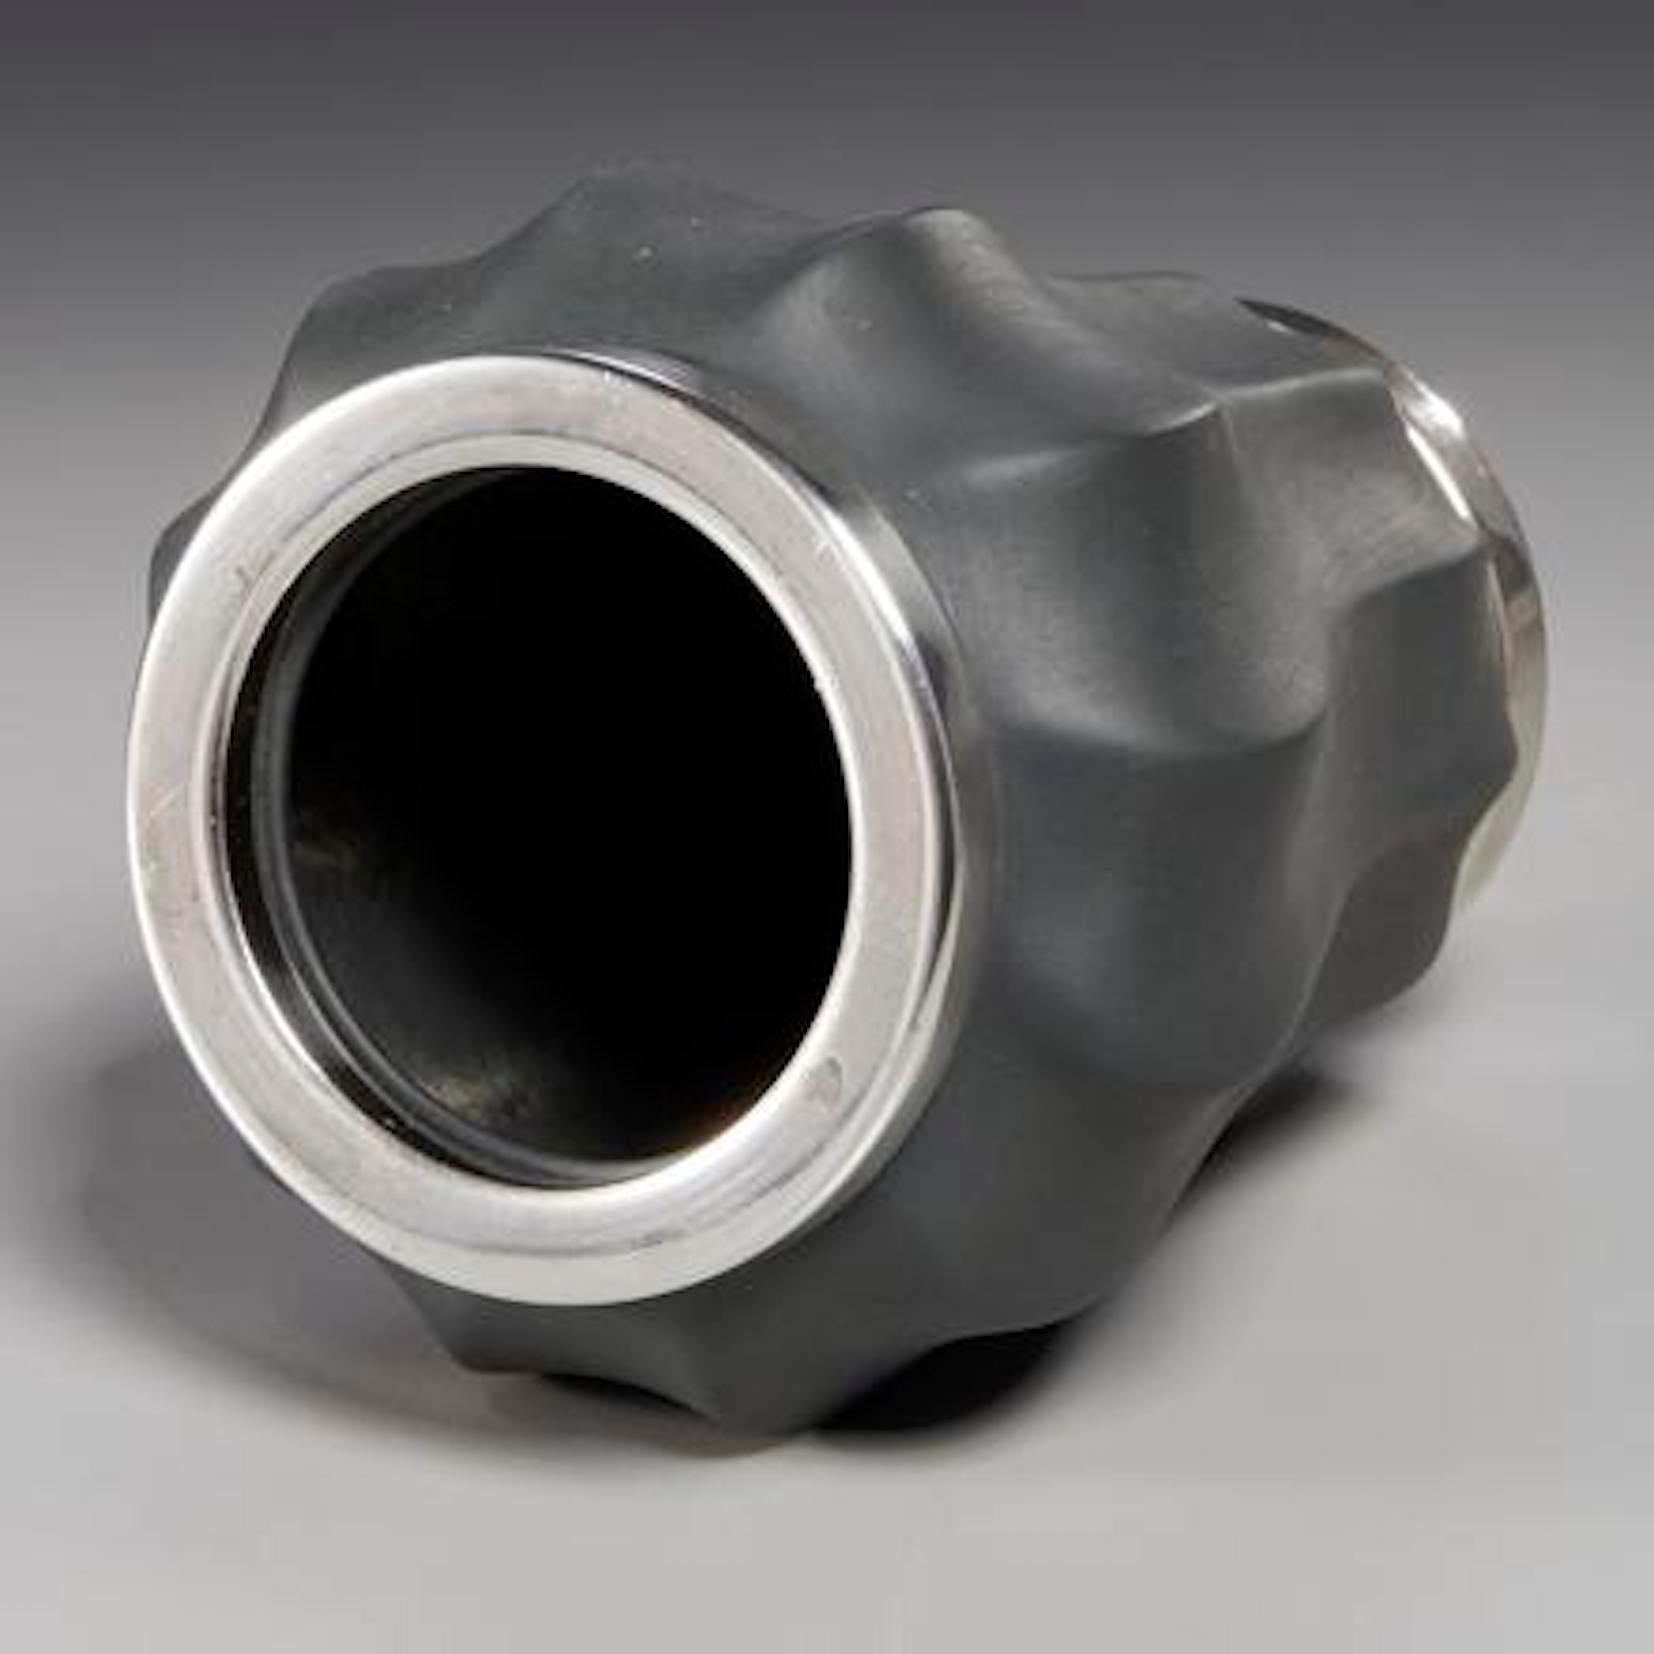 Bulgari silver-mounted porcelain  ribbed matte grey vase. Bvlgari touch marks to
underside and rim